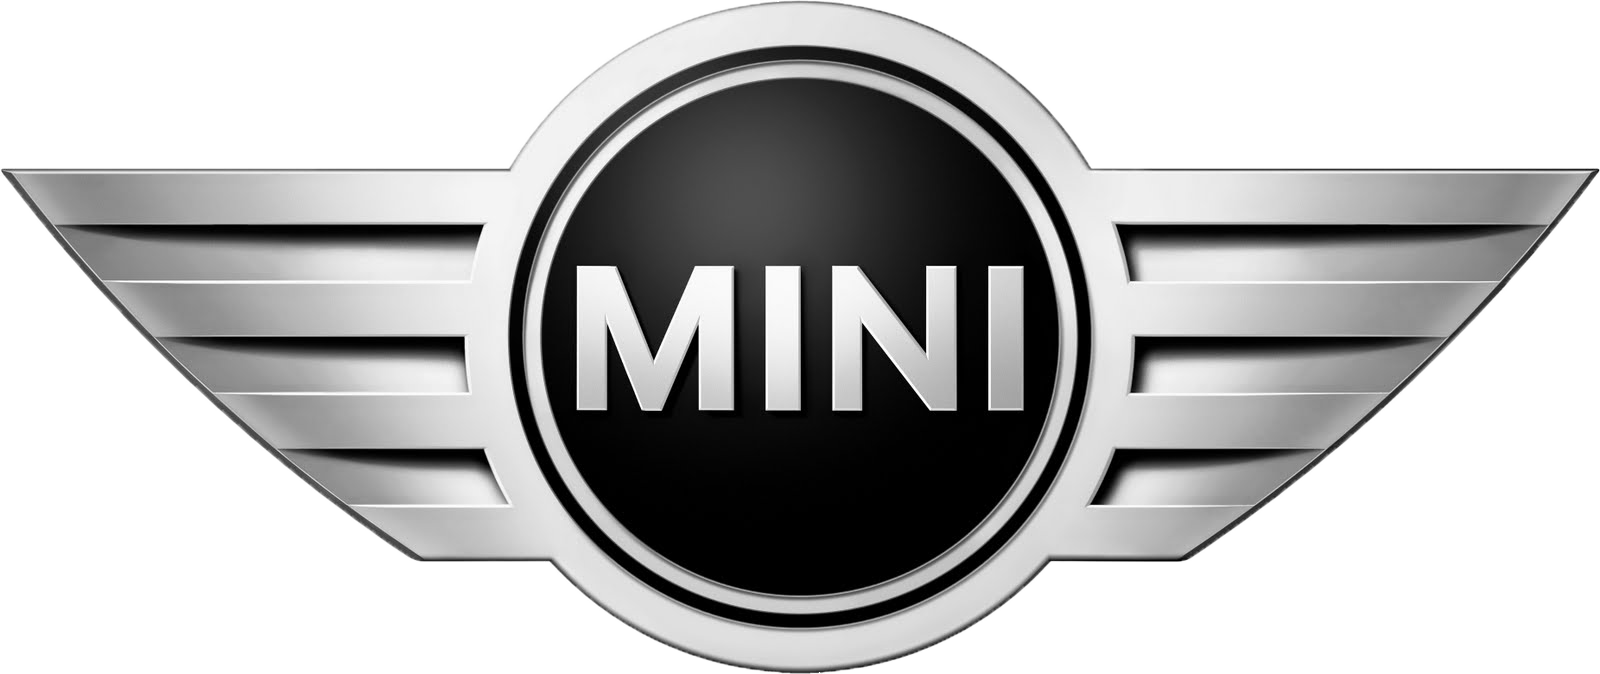 Mini  Car Logo